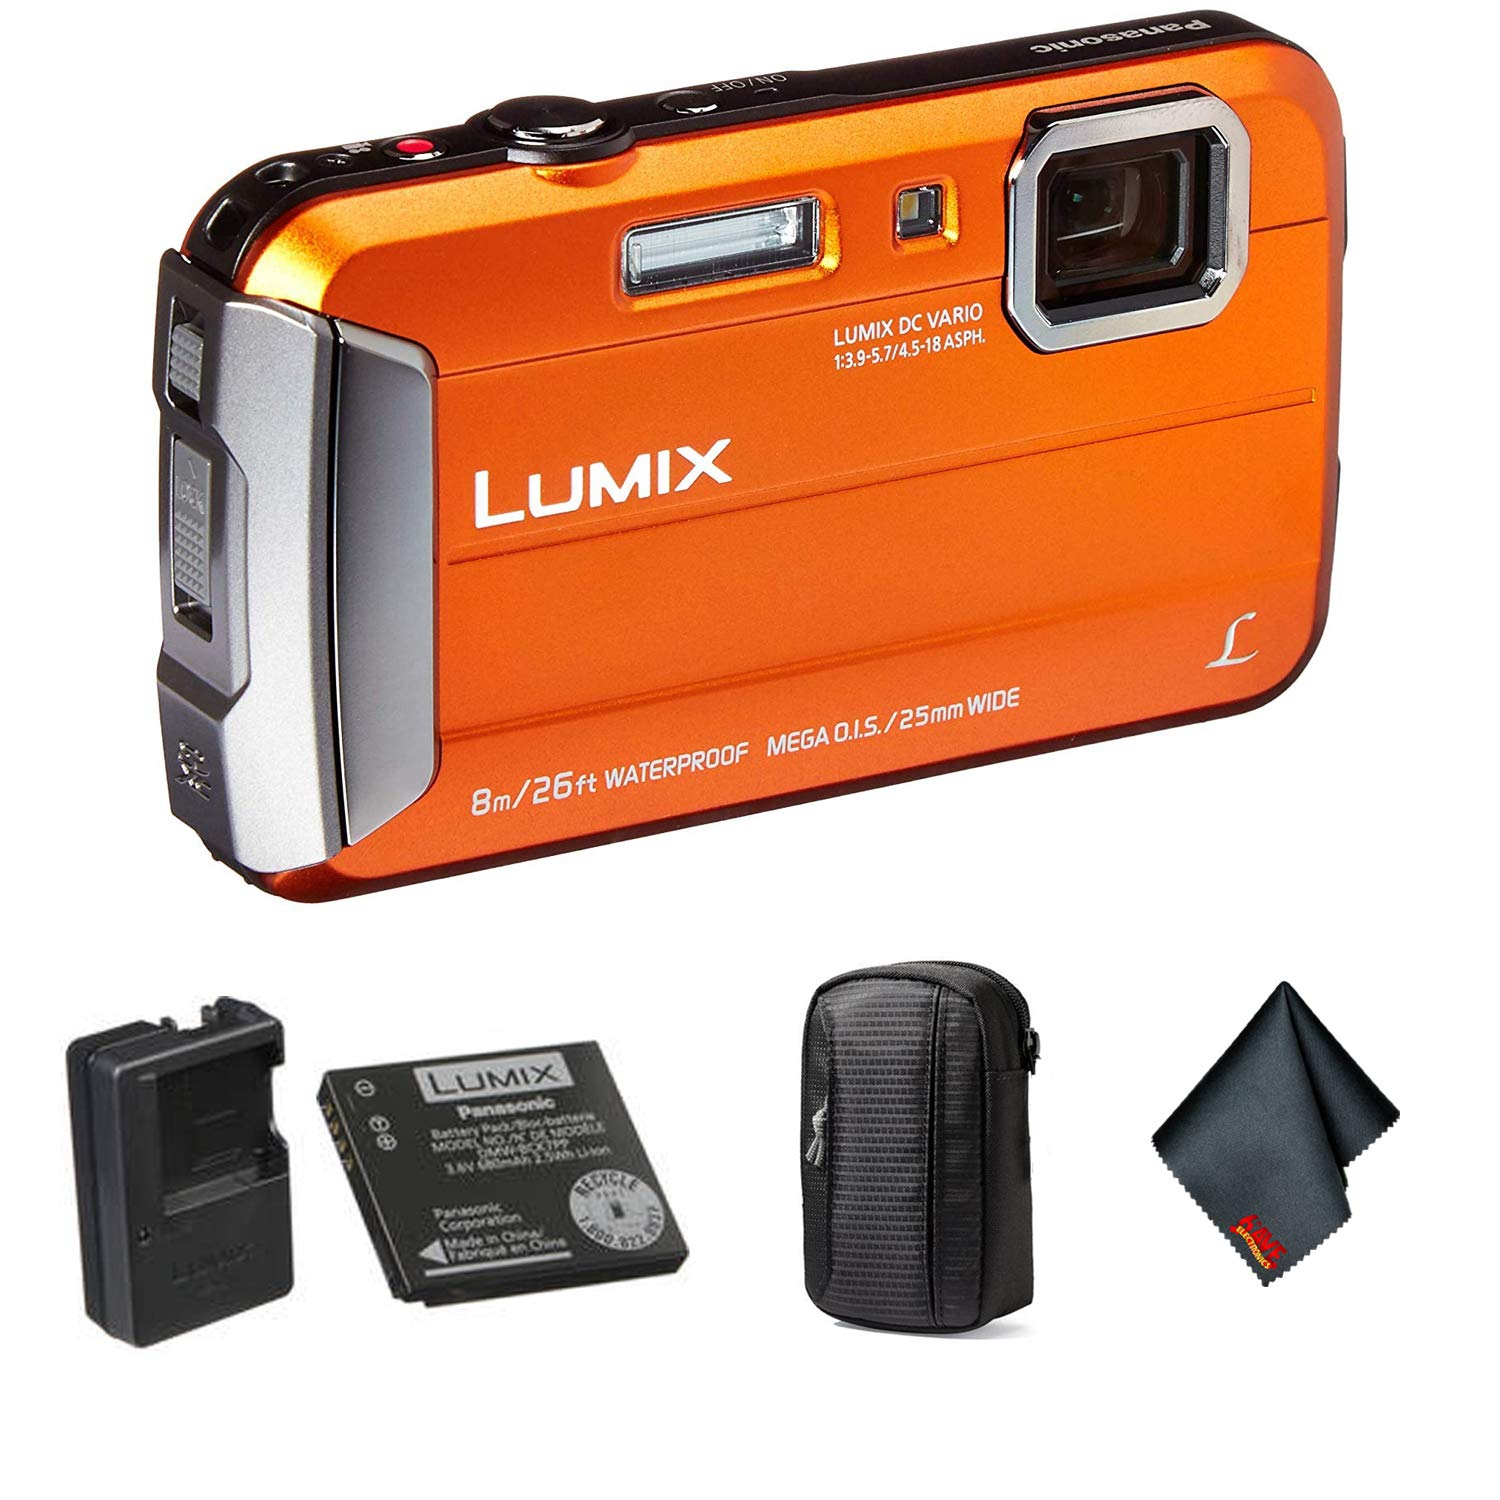 Panasonic Lumix DMC-TS30 Waterproof Digital Camera (Orange) - Bundle with Small Case and More